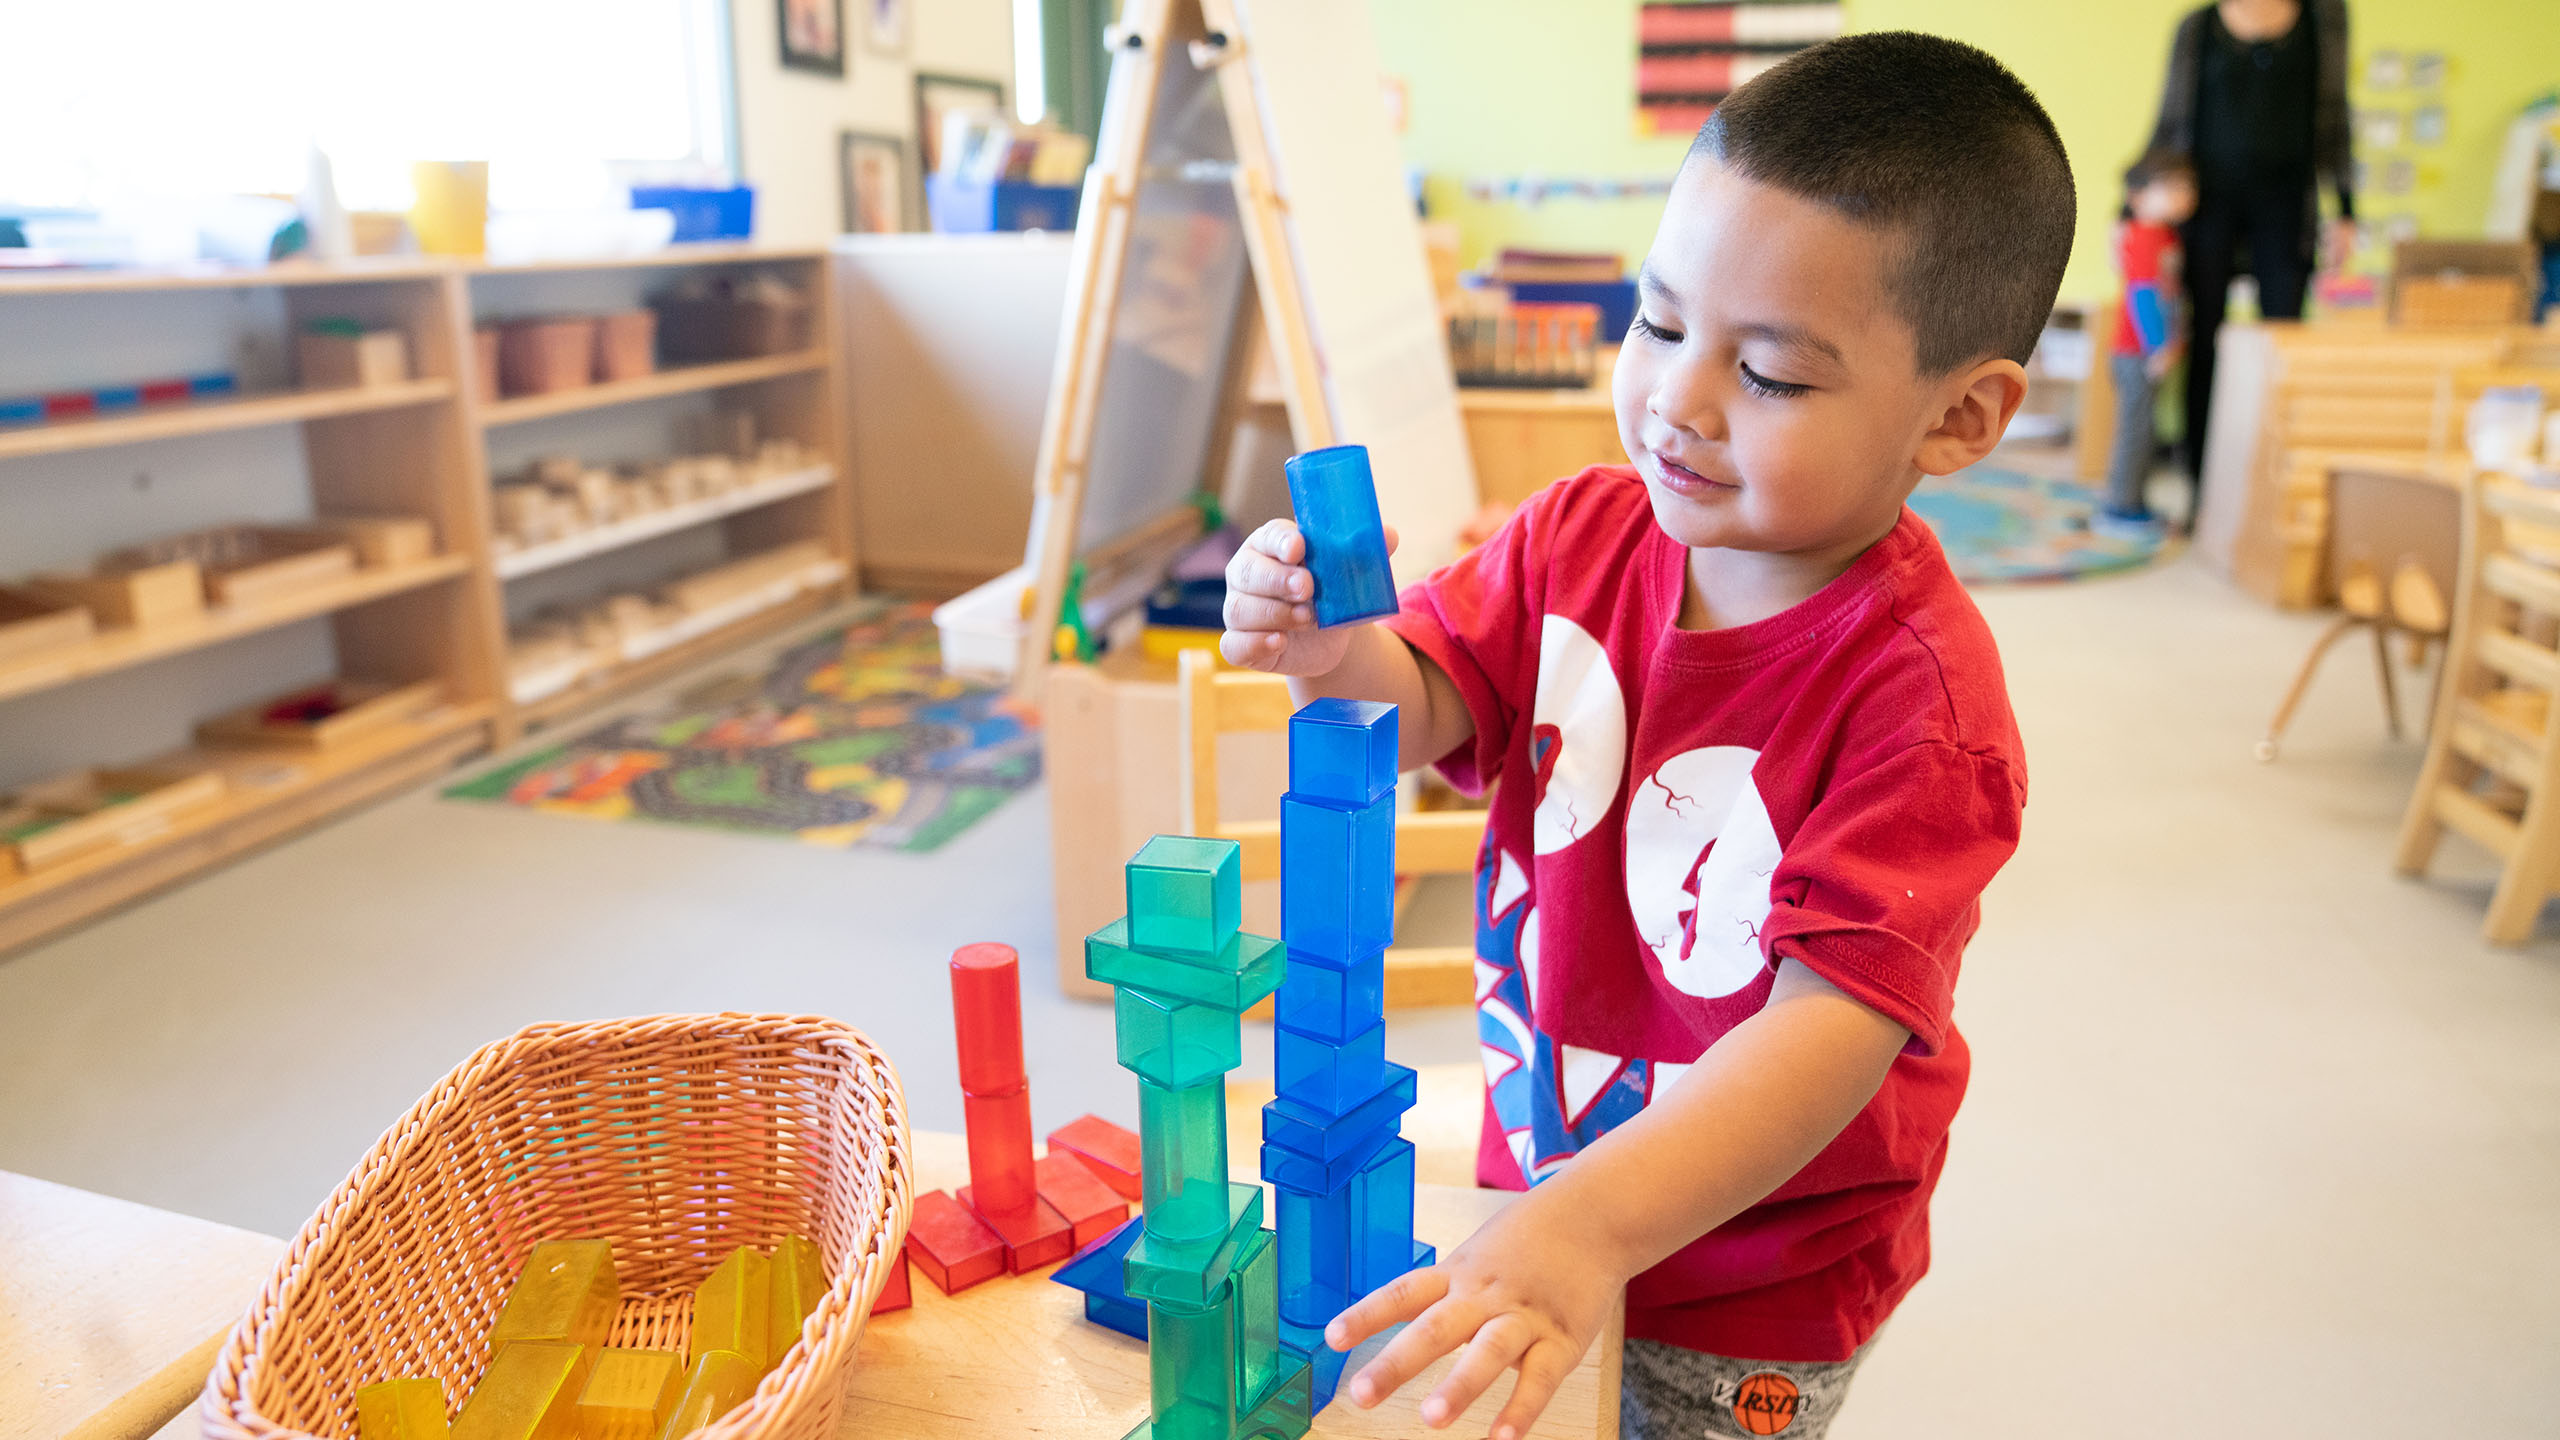 A child gleefully stacks translucent colored blocks